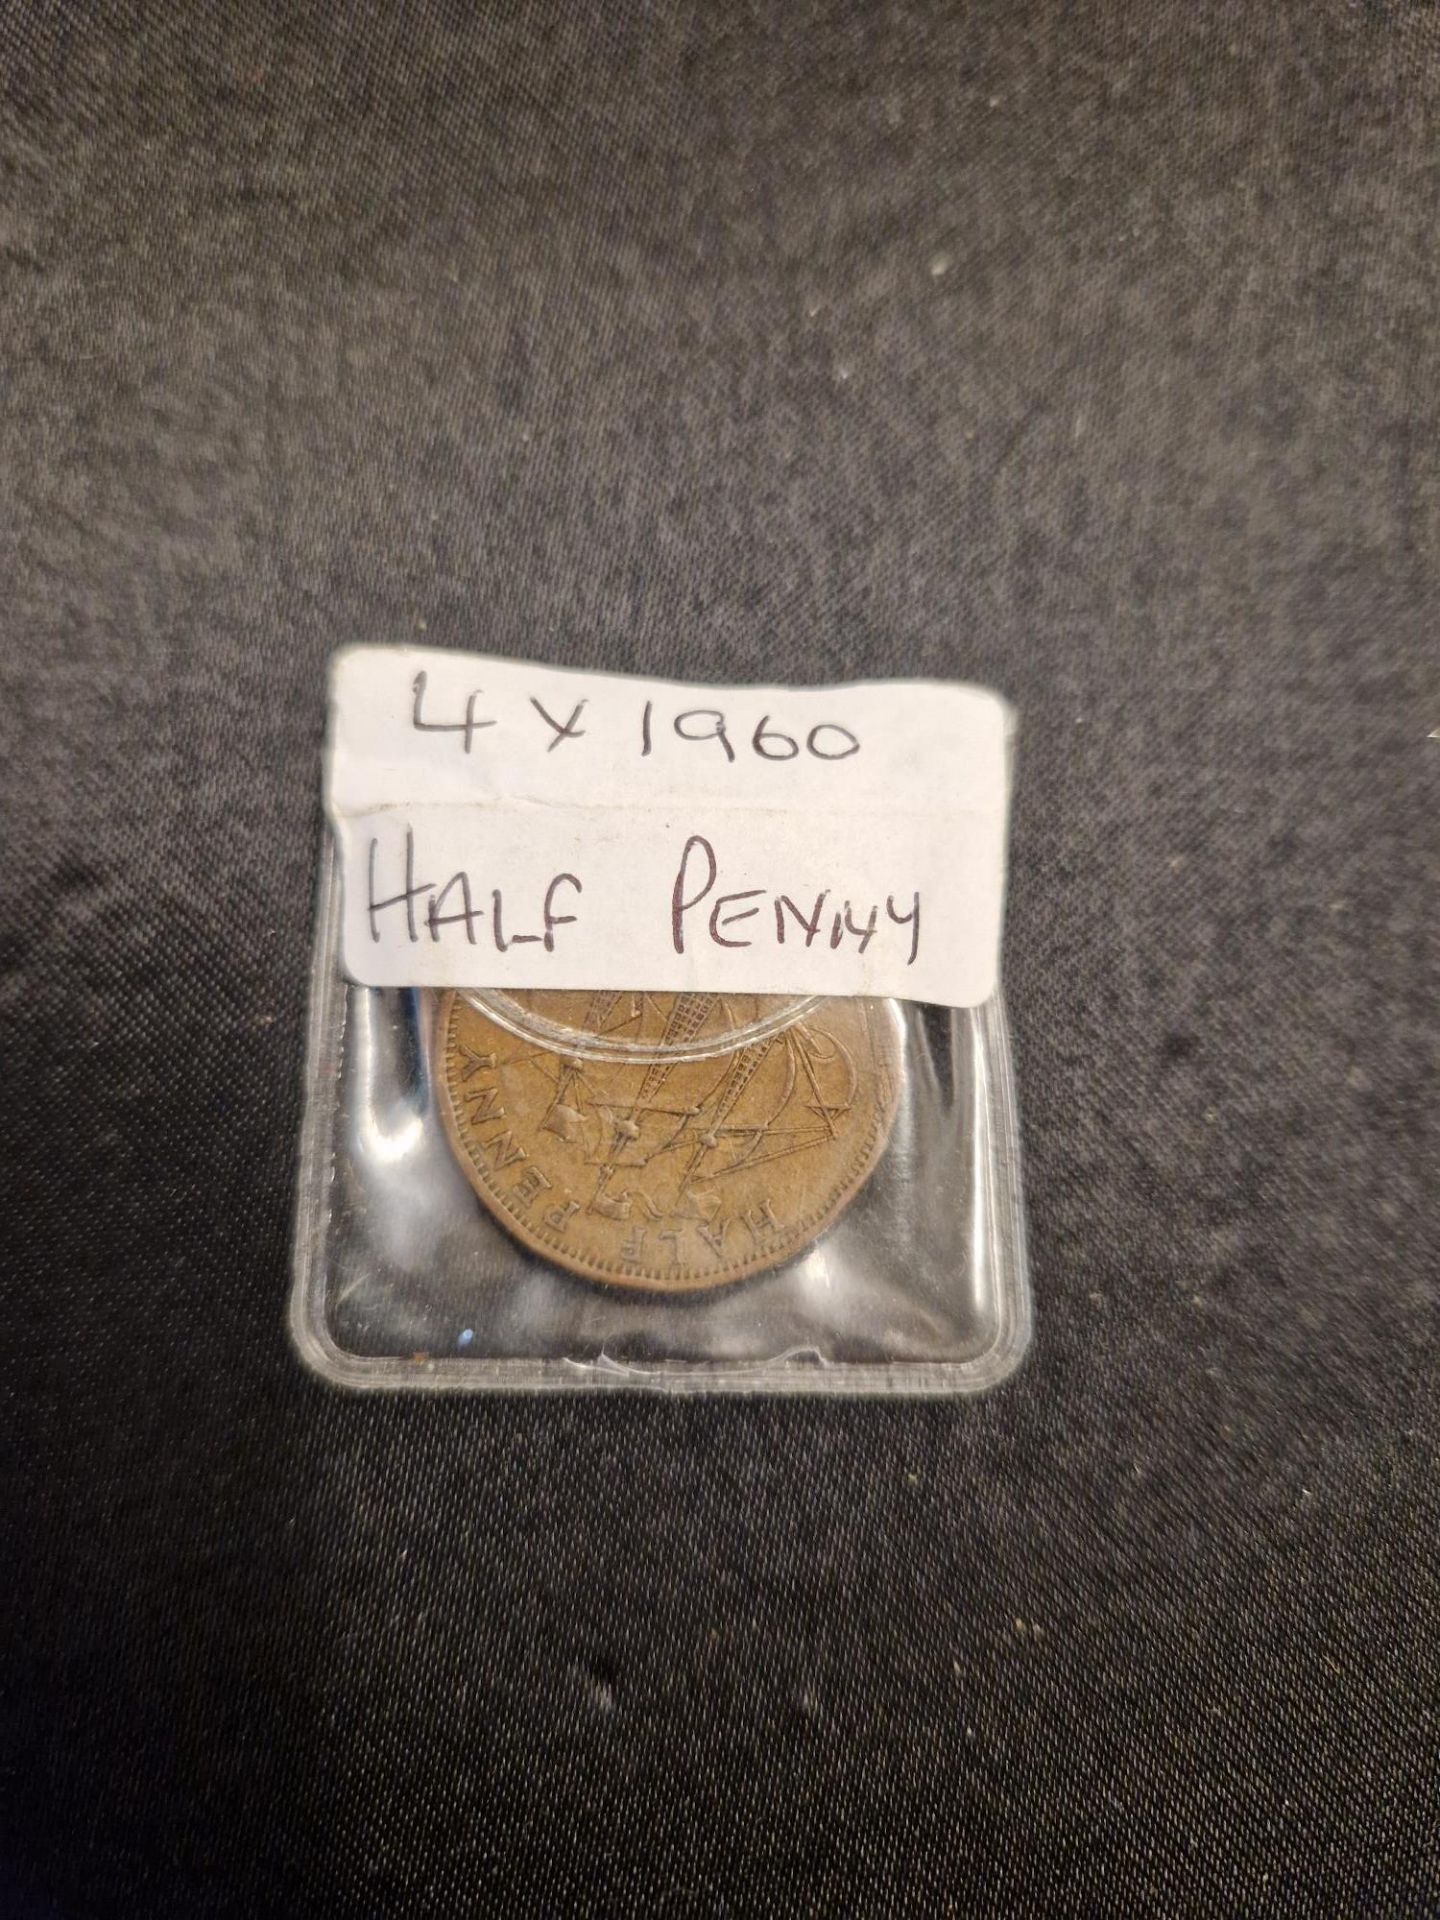 4 x 1960 half penny